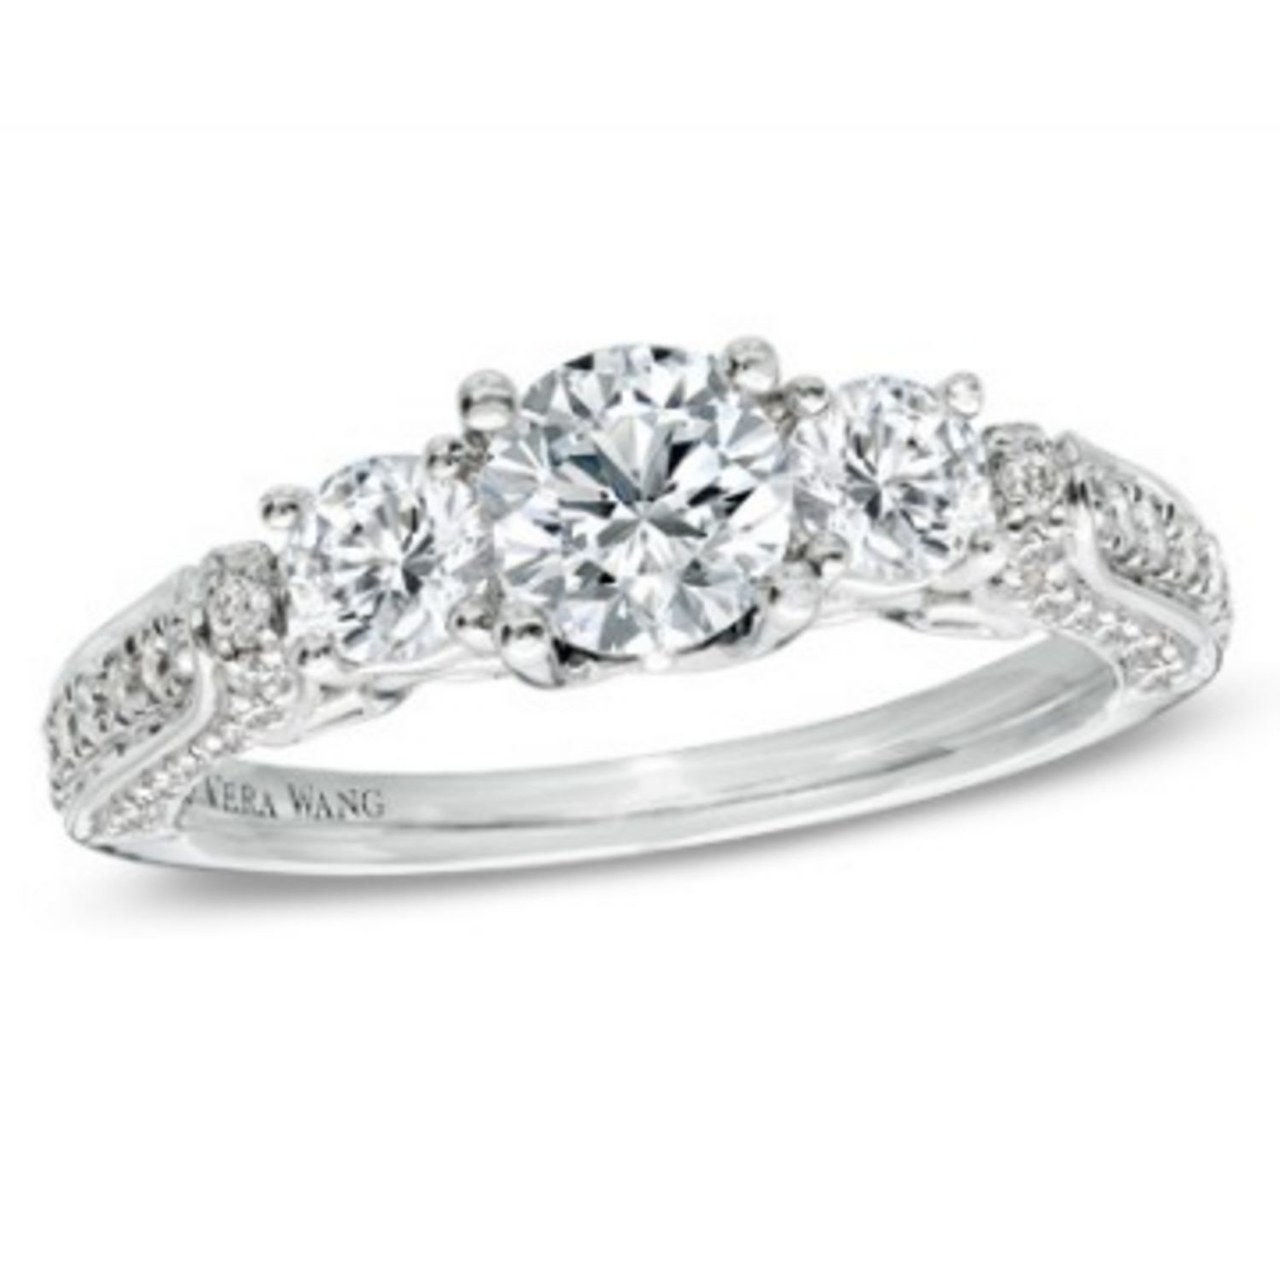 1 perrie edwards engagement ring zayn malik one direction celebrity weddings